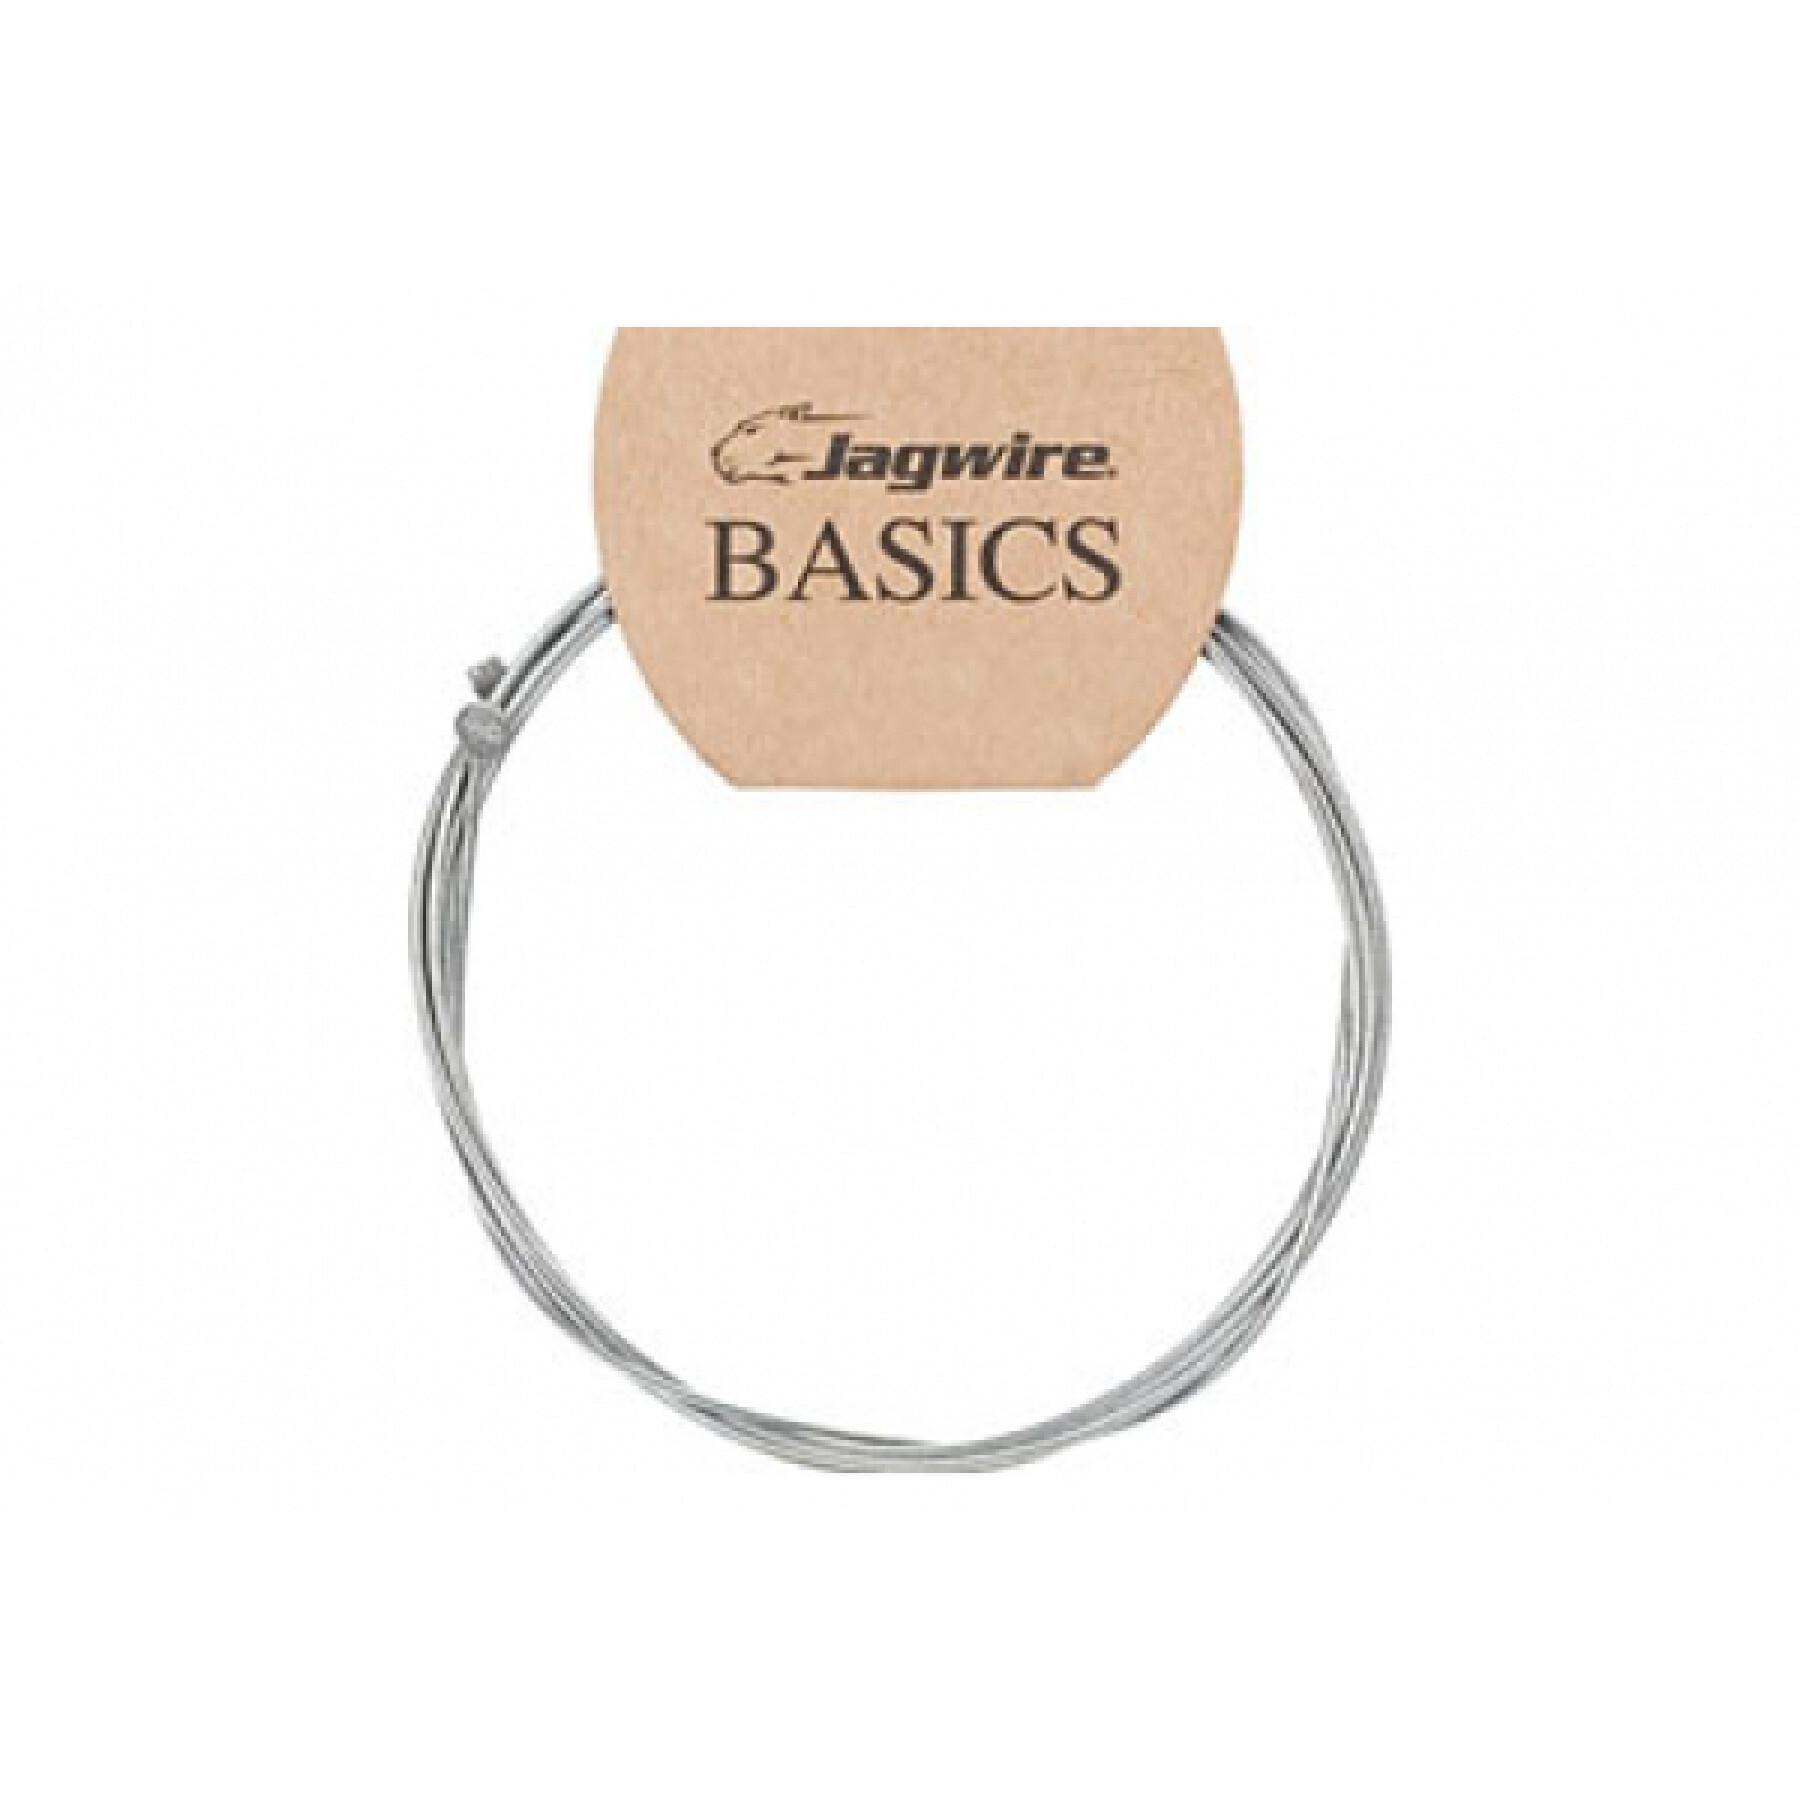 Kabel för spårväxel Jagwire Basics 1.2X2300mm Double Ended Campagnolo/Huret, Schwinn, Benelu, Simplex